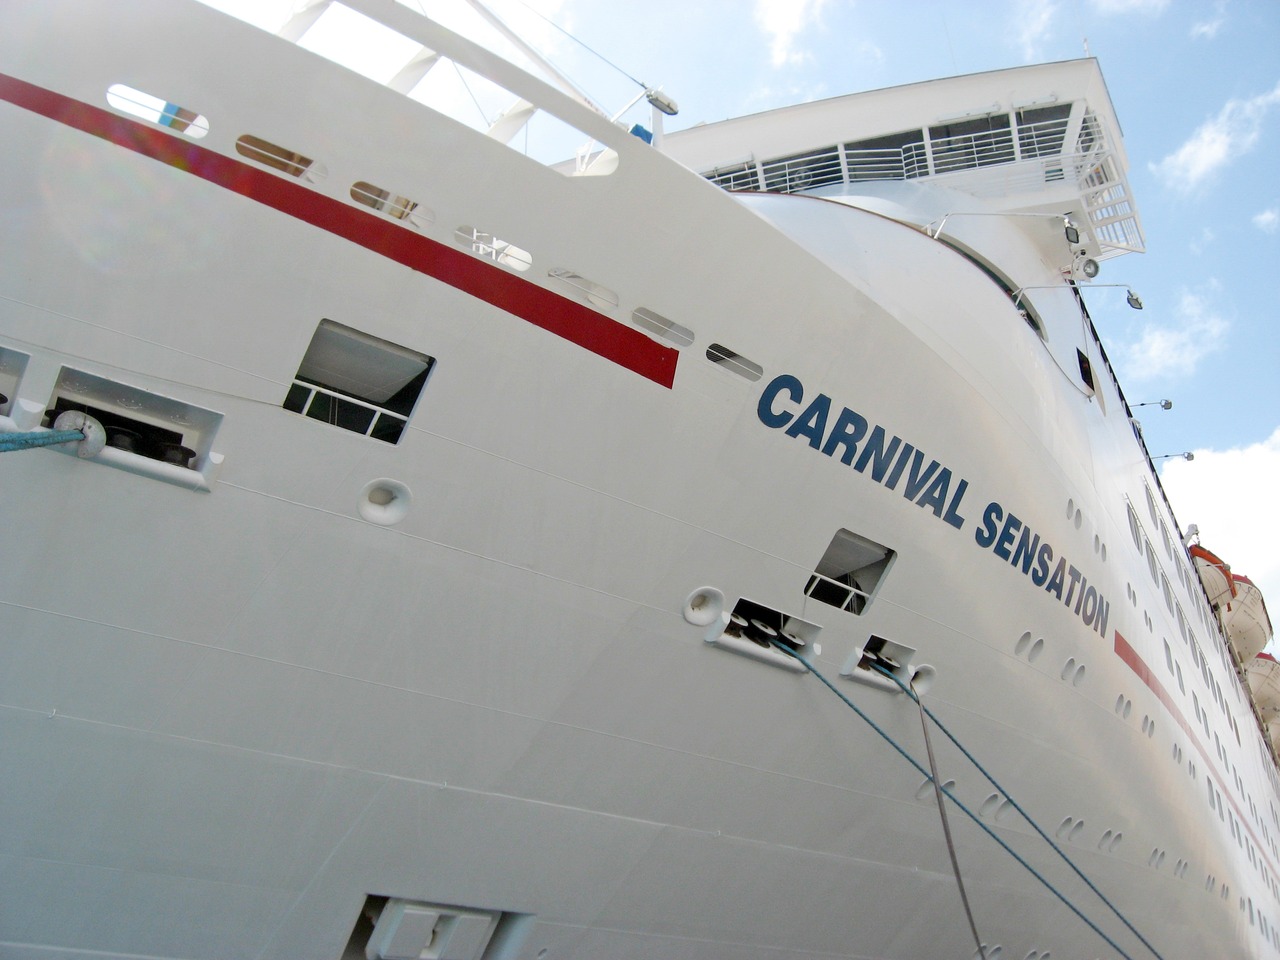 Carnival Sensation docked at Prince George Wharf, Port of Nassau.